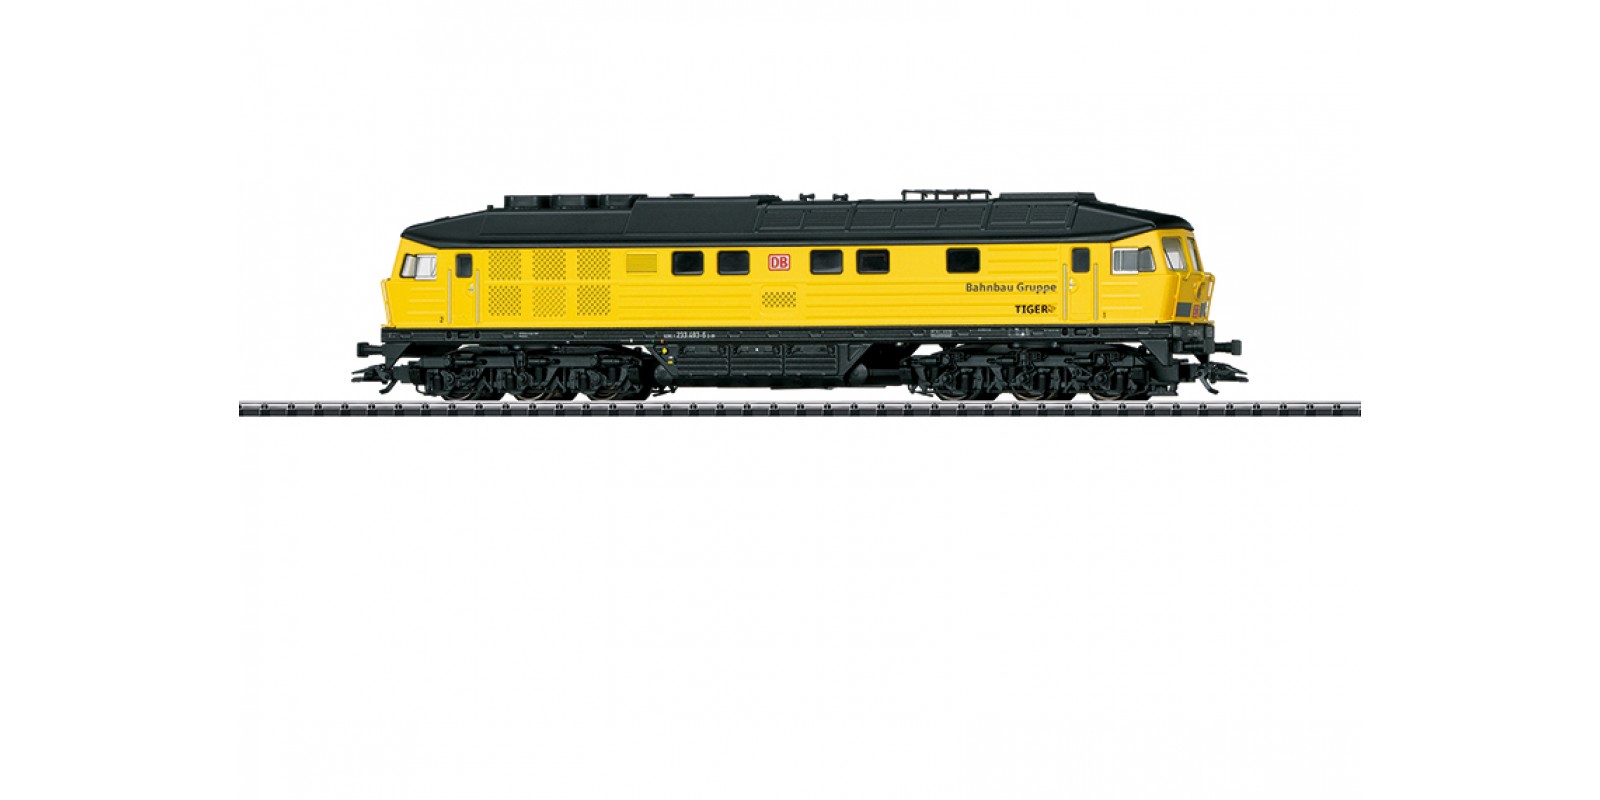 T22402 Class 233 Diesel Locomotive